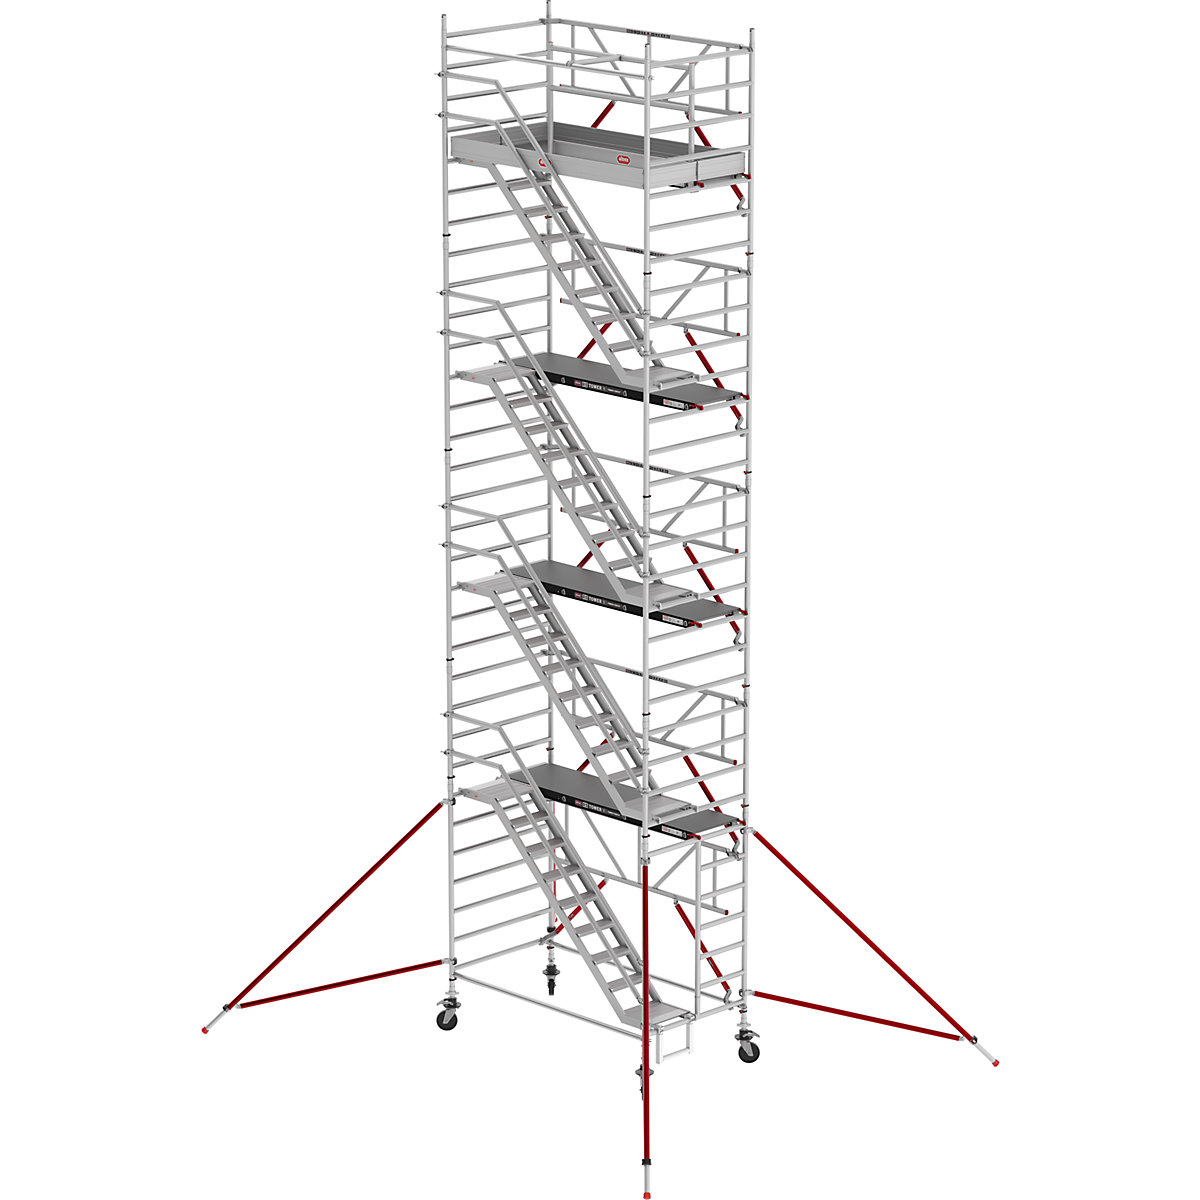 Oder s stopnicami RS TOWER 53, širok – Altrex, lesena ploščad, dolžina 2,45 m, delovna višina 10,20 m